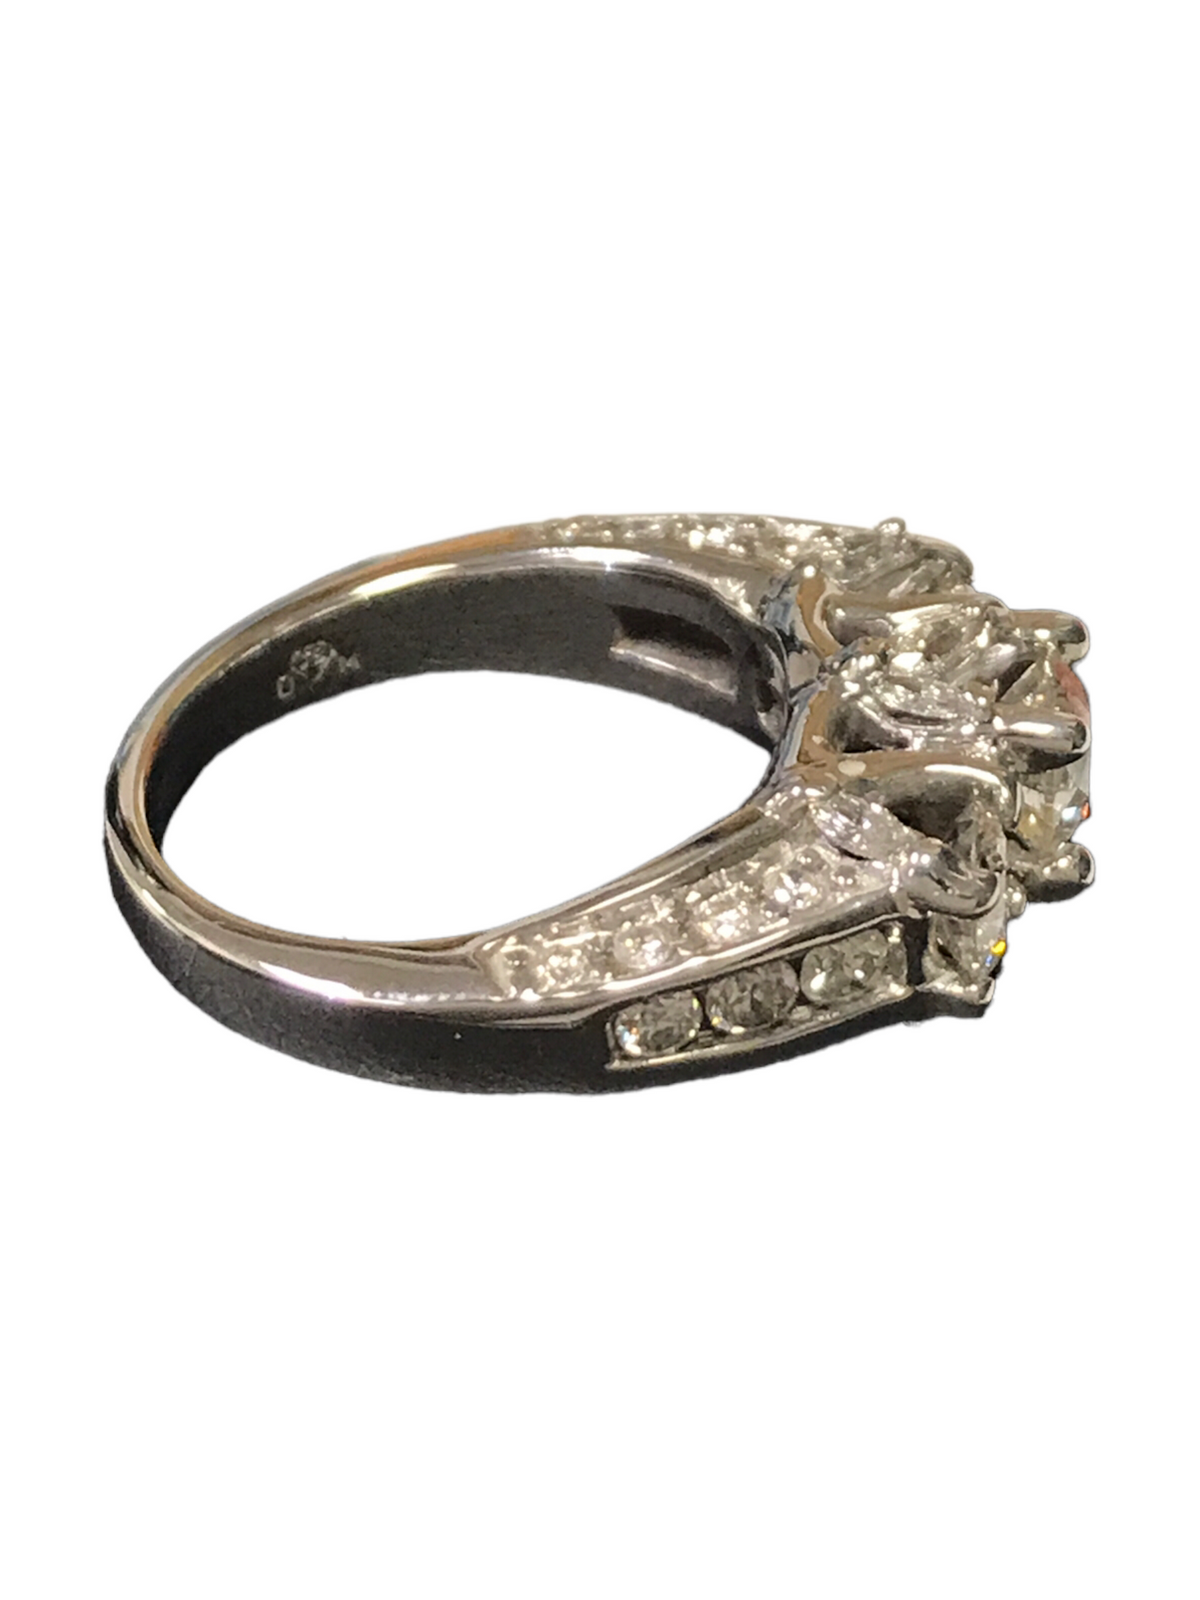 14K White Gold Diamond Ladies Engagement Ring Size 5